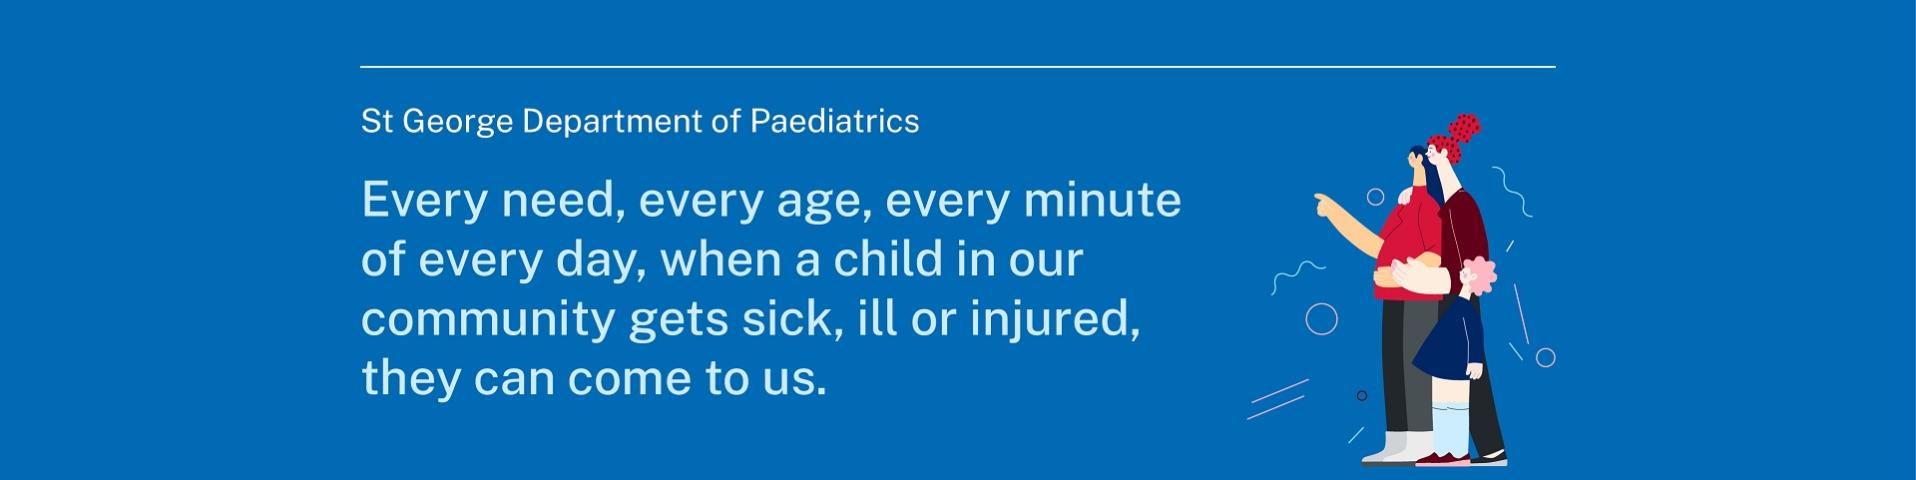 St George Department of Paediatrics Website Header